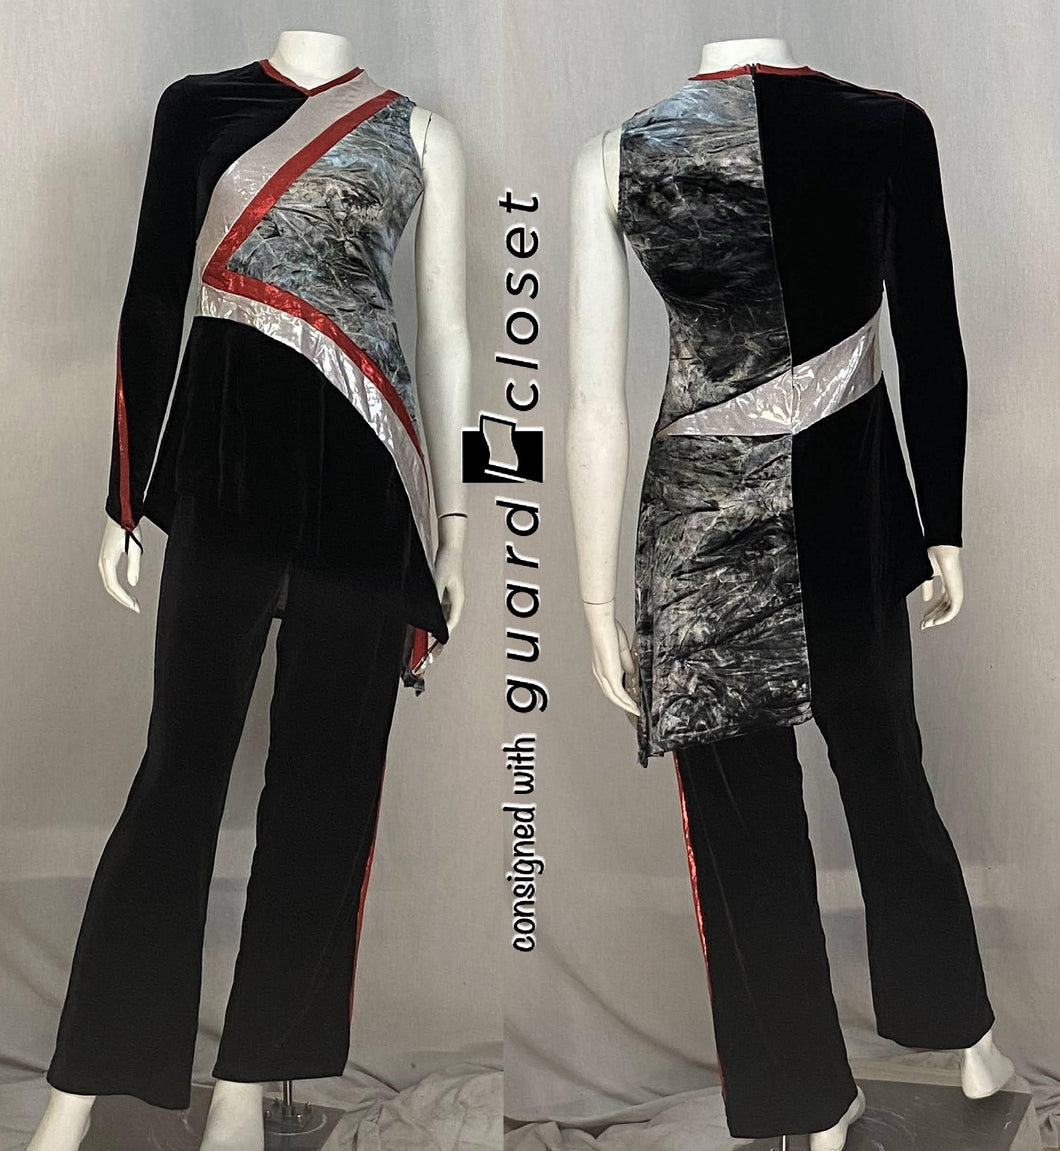 23 Complete Red/black/gray Uniforms - Tops/pants Dance Sophisticates